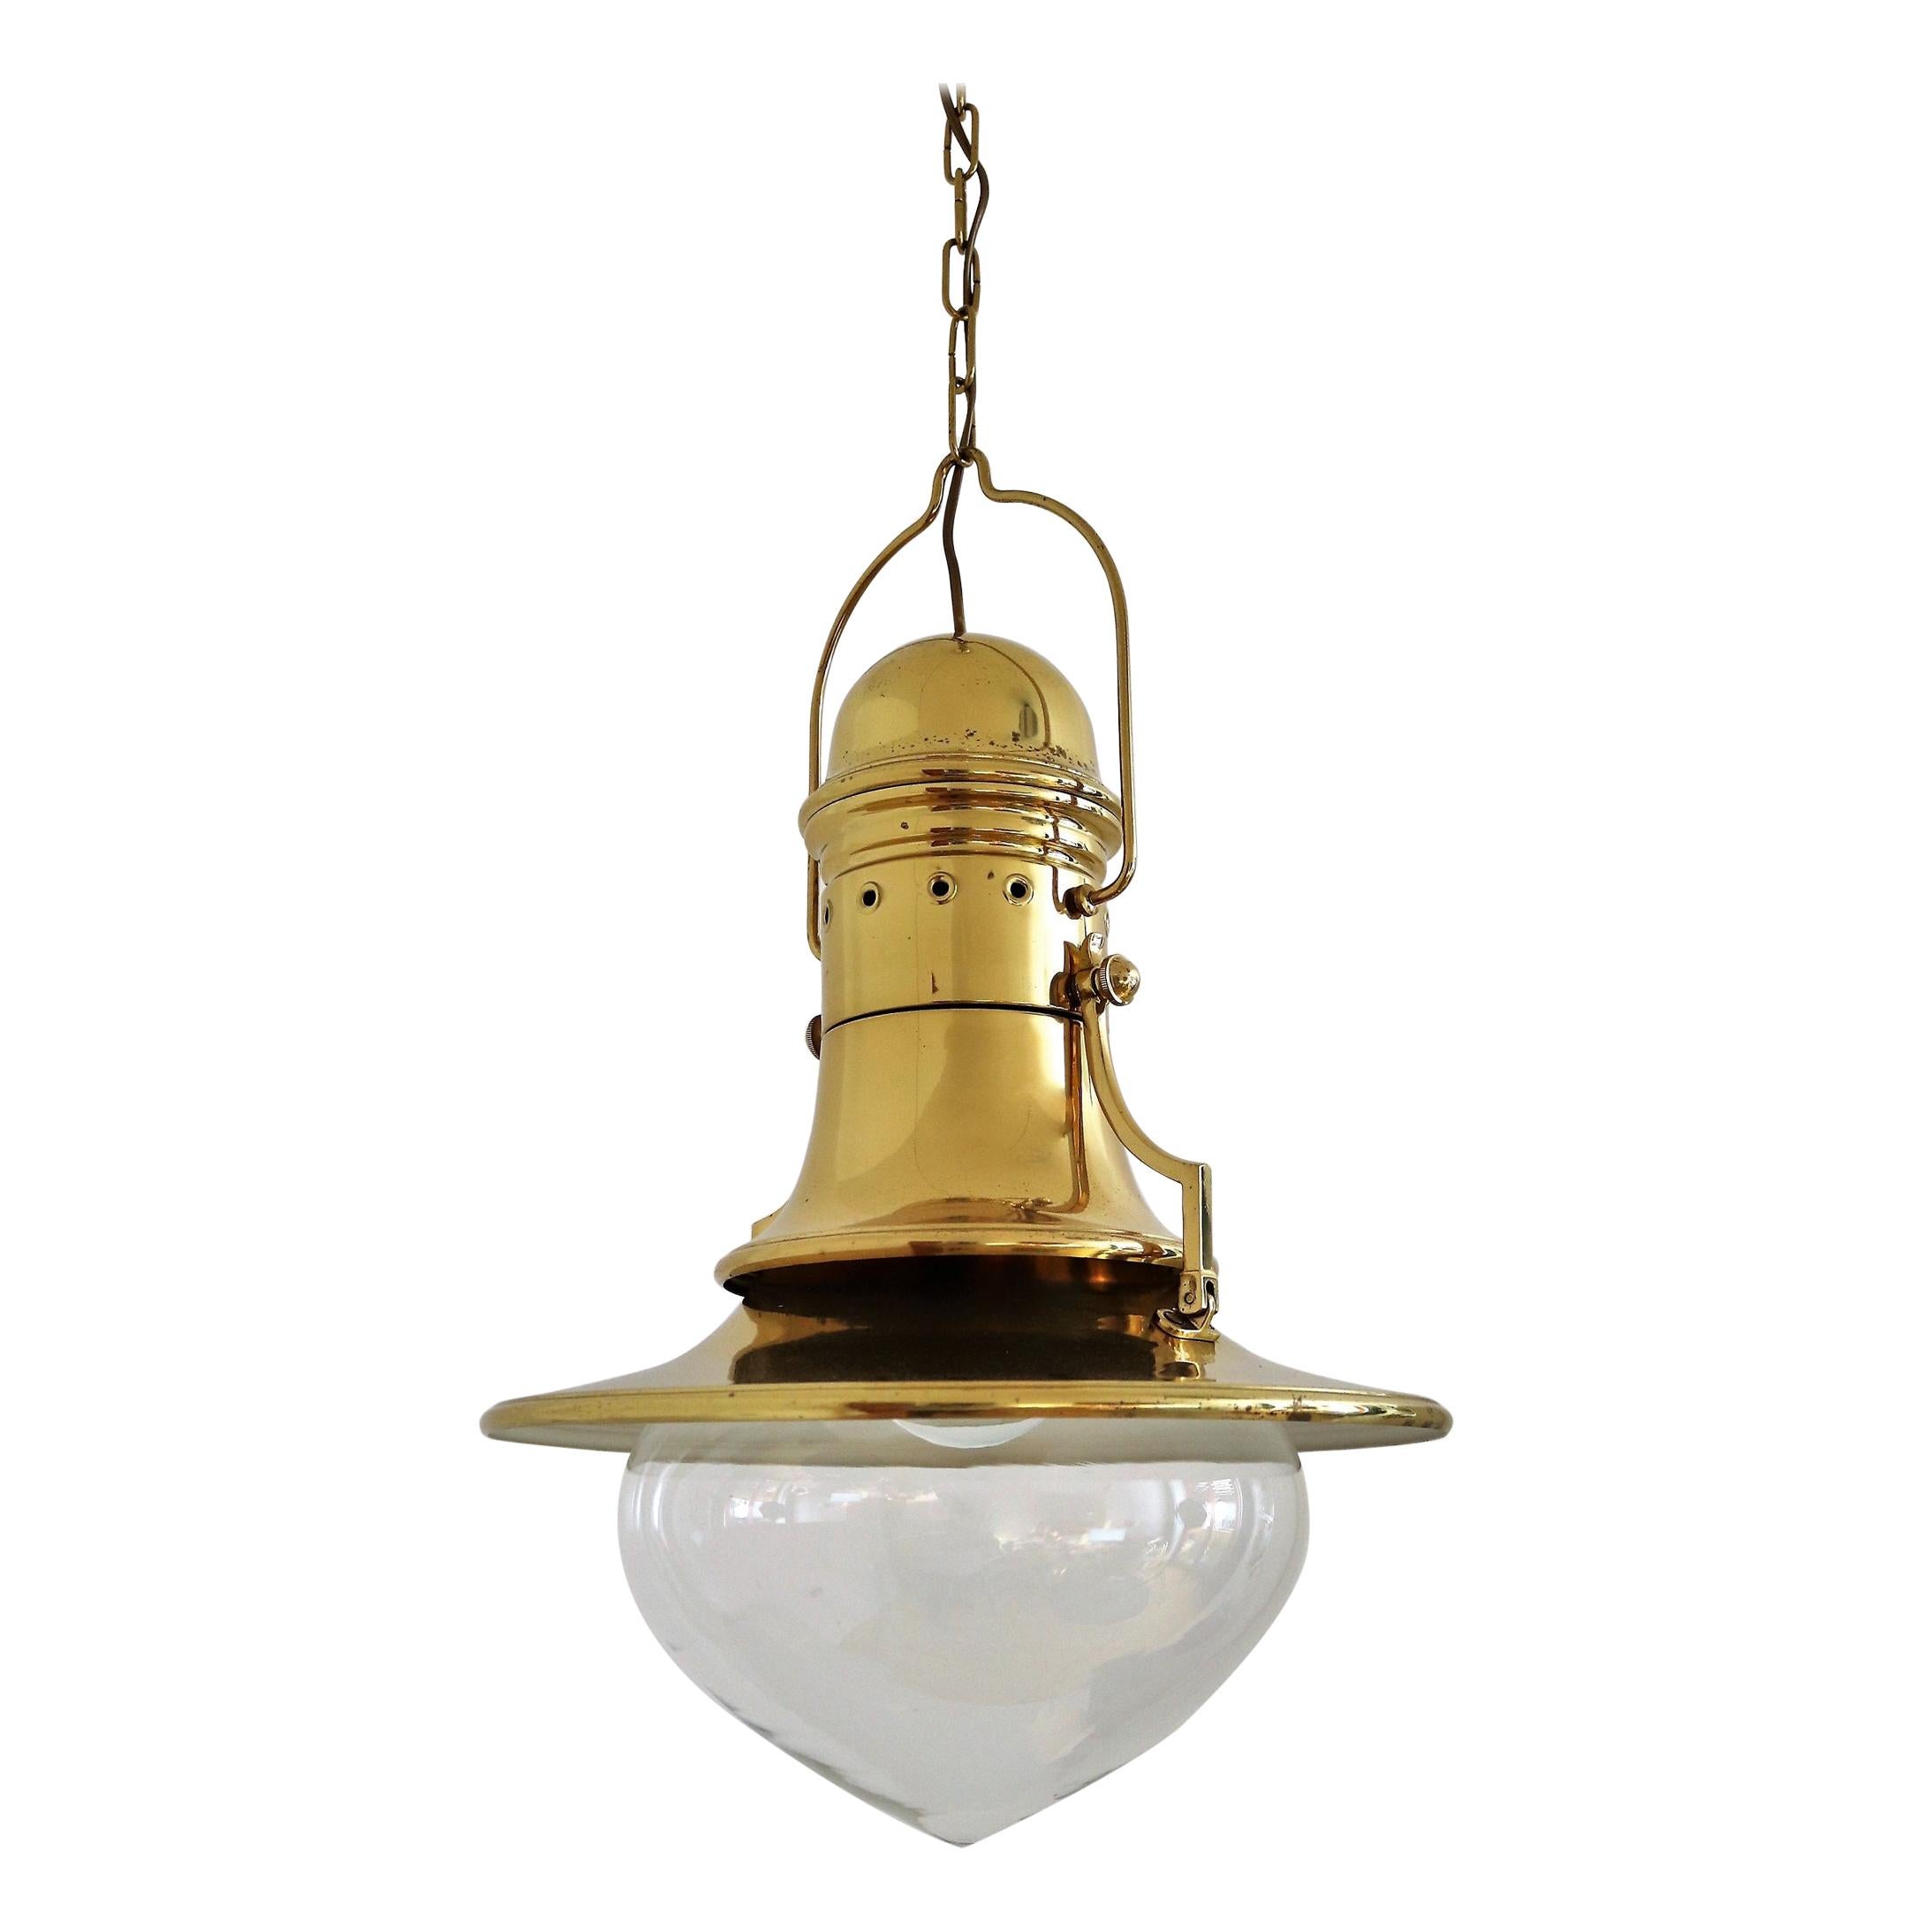 Italian Brass and Murano Glass Pendant Lamp or Lantern in Nautical Style, 1970s